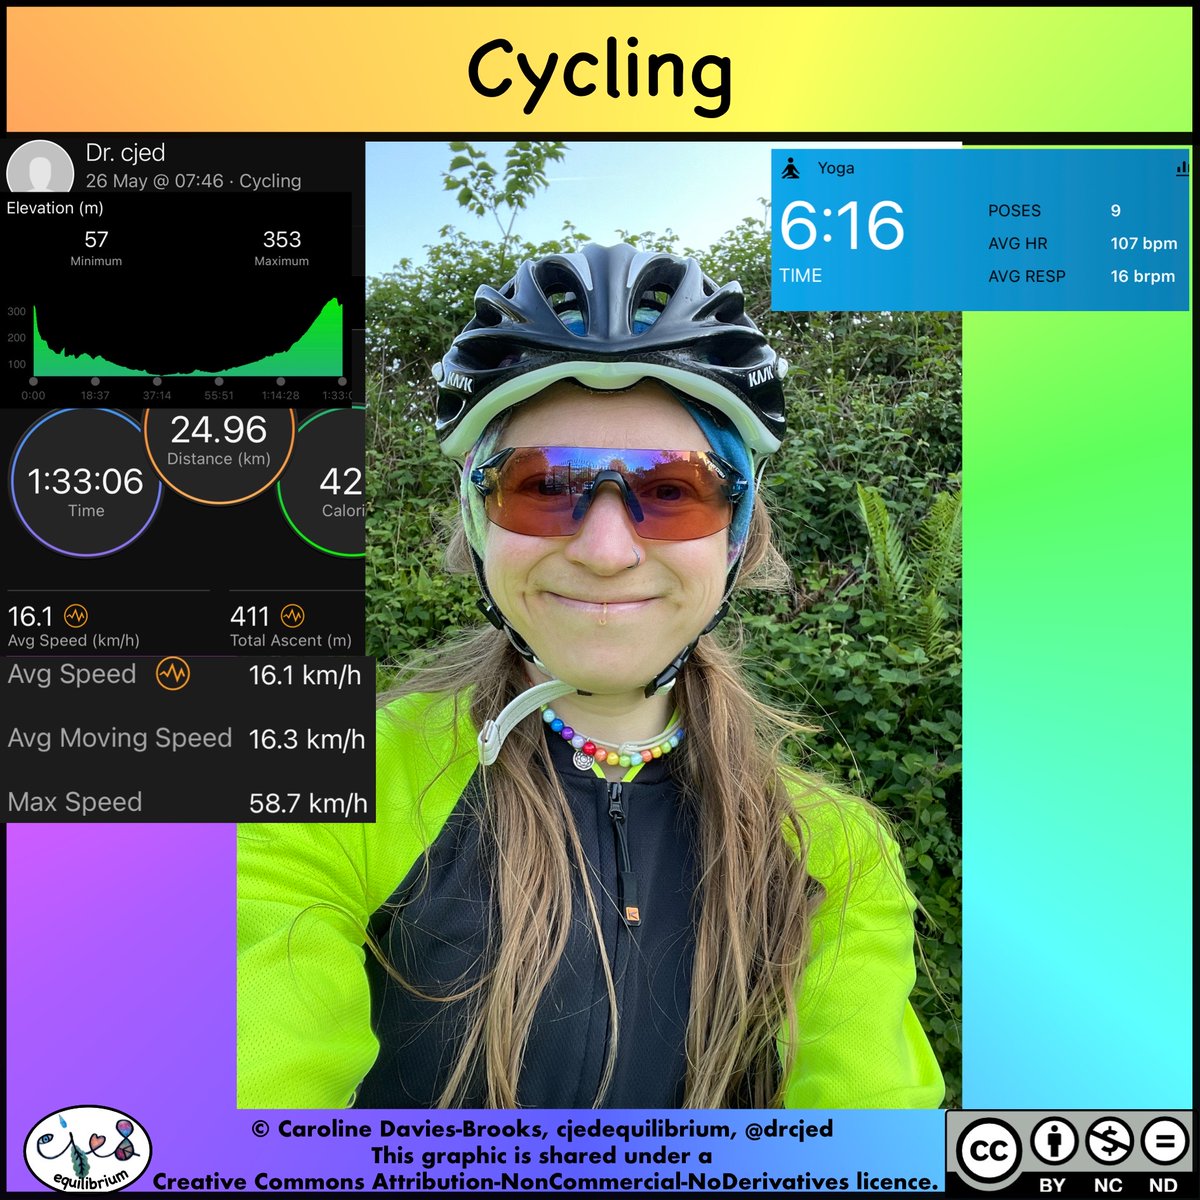 Wonderful #cycle this morning exploring #wales #pontypool #cwmbran #cycling #roadcycling #garmincycling #garminfitness #flexibility #wfpb #plantbasedliving #personaltrainer #consistencyiskey #getoutdoors ☀️